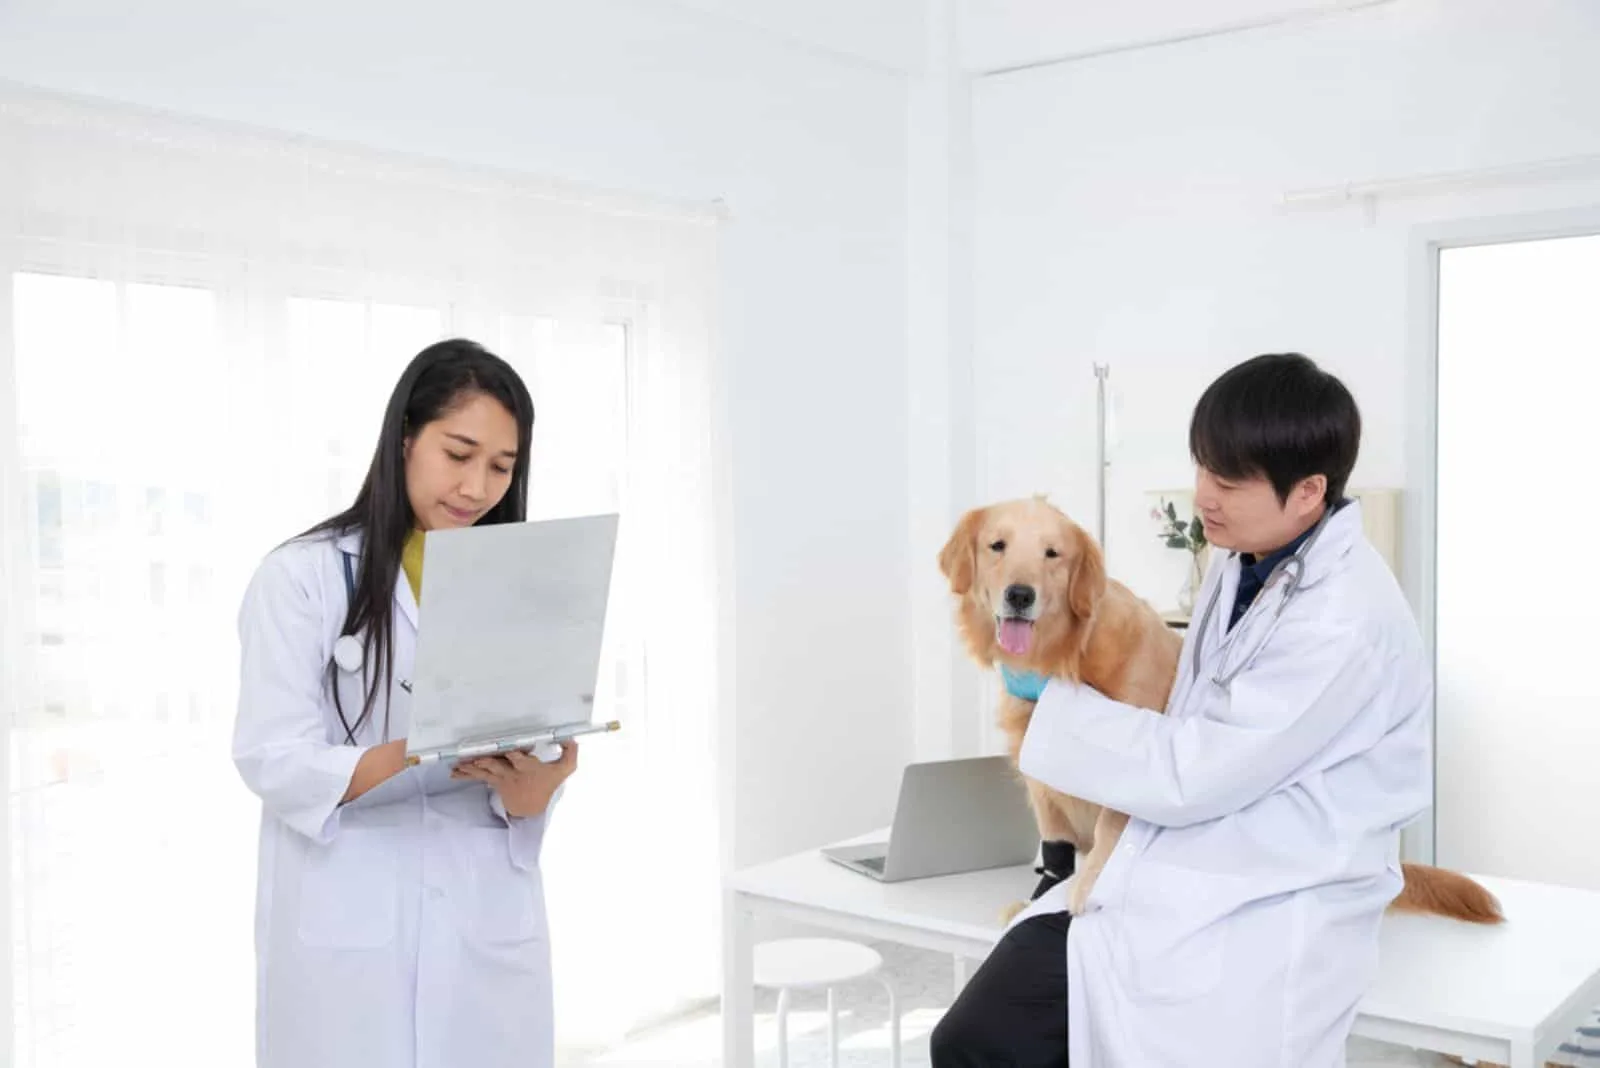 Veterinary team for treating sick Golden Retriever